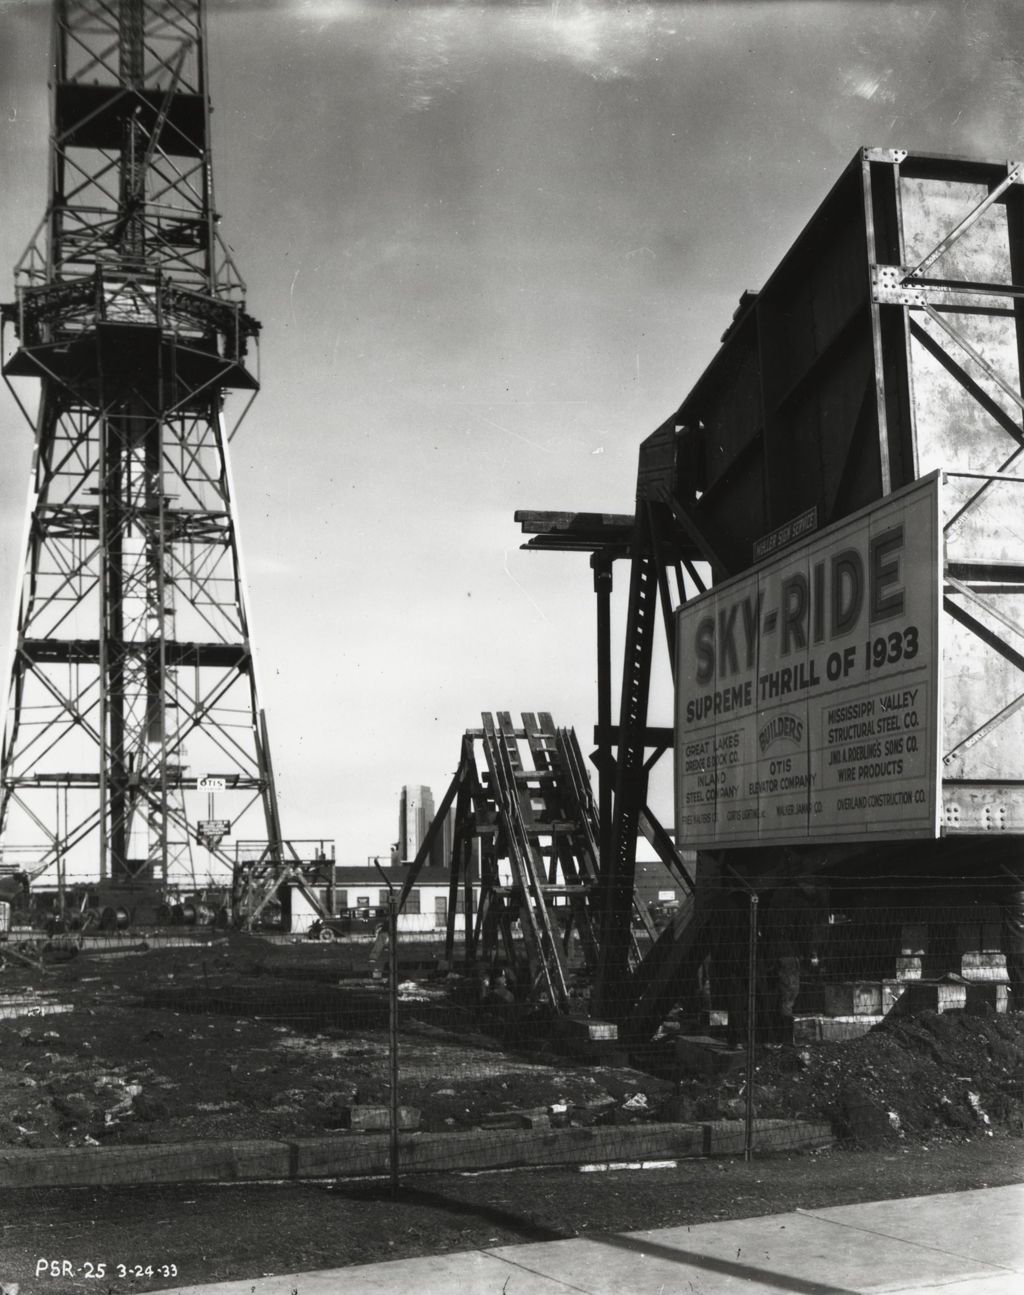 Century of Progress Skyride towers in 1933